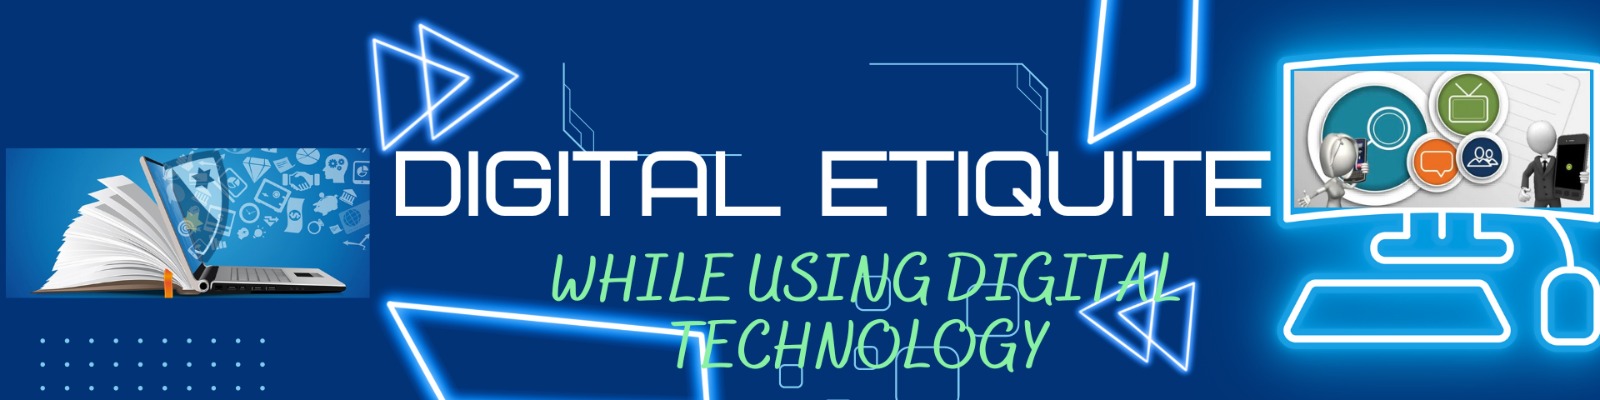 Digital Etiquite While Using Digital Technology